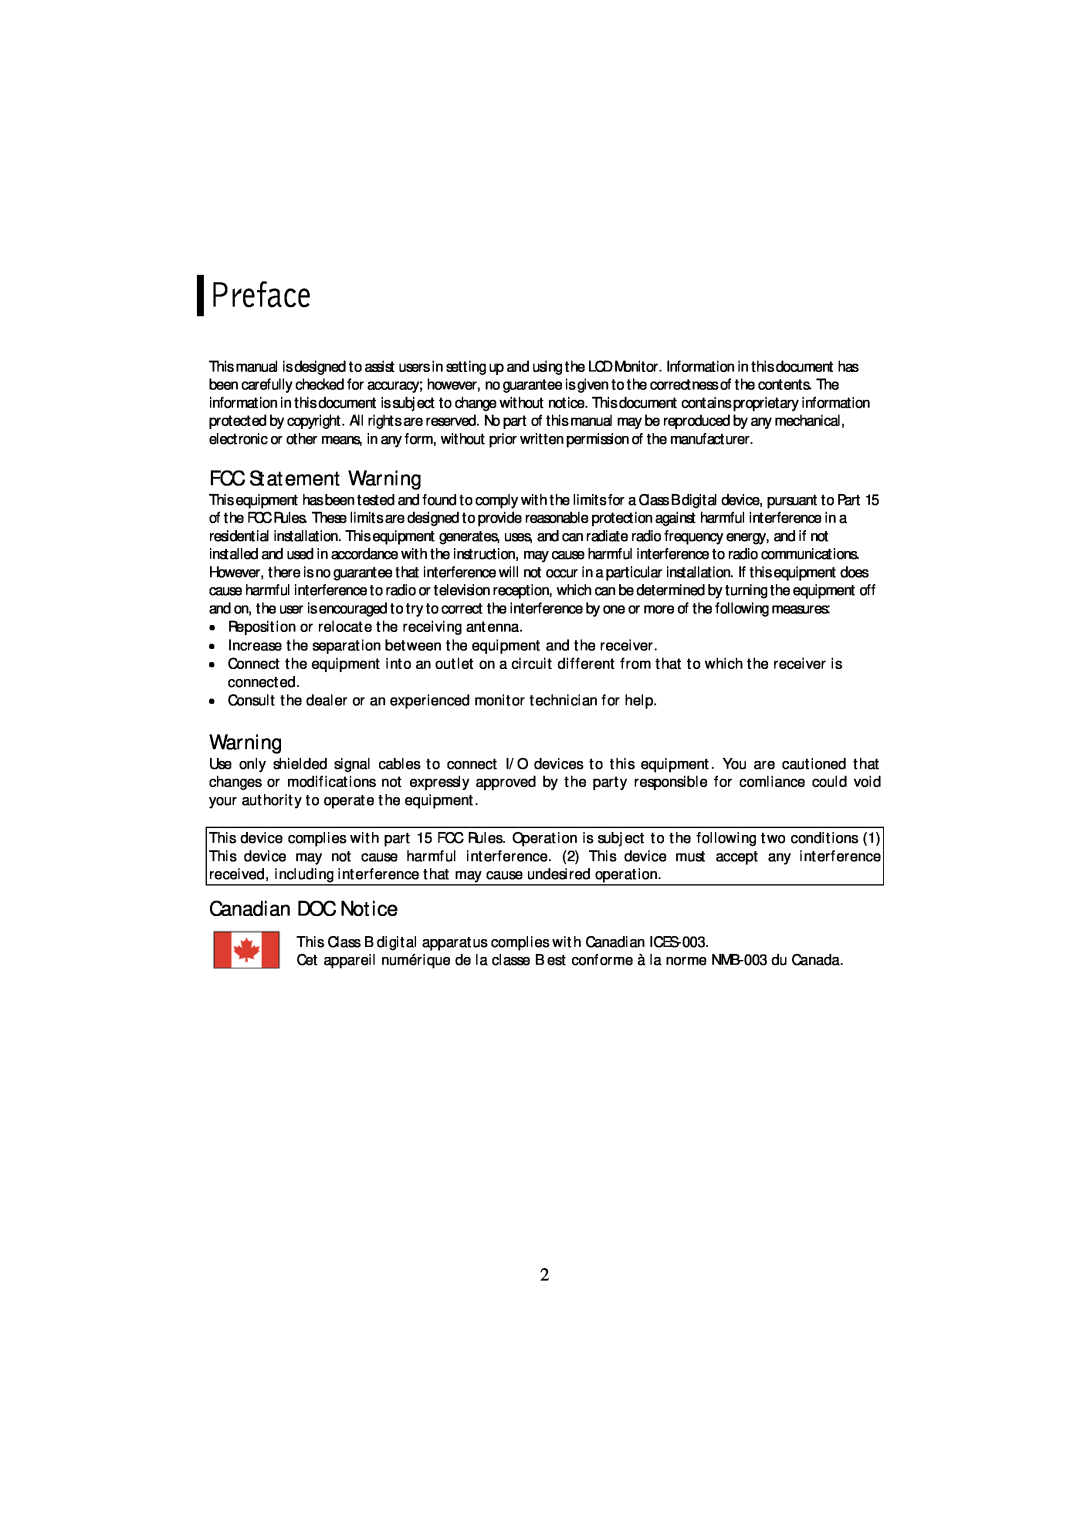 Planar PL1911MW manual Preface, FCC Statement Warning, Canadian DOC Notice 